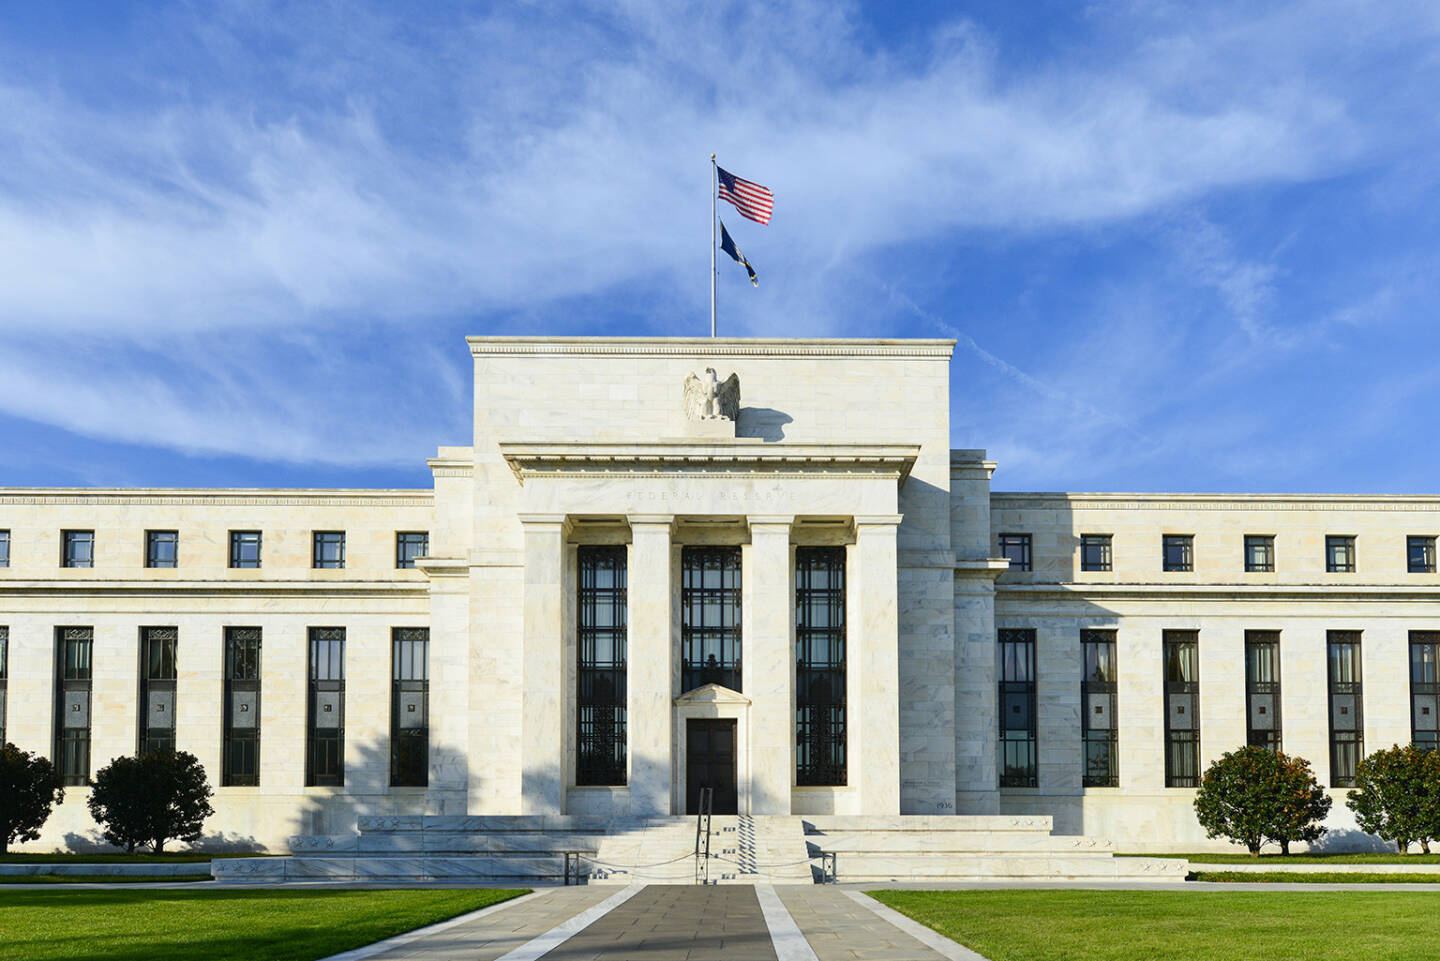 Federal Reserve Building, FED, Washington DC, USA http://www.shutterstock.com/de/pic-160884488/stock-photo-federal-reserve-building-in-washington-dc-united-states.html